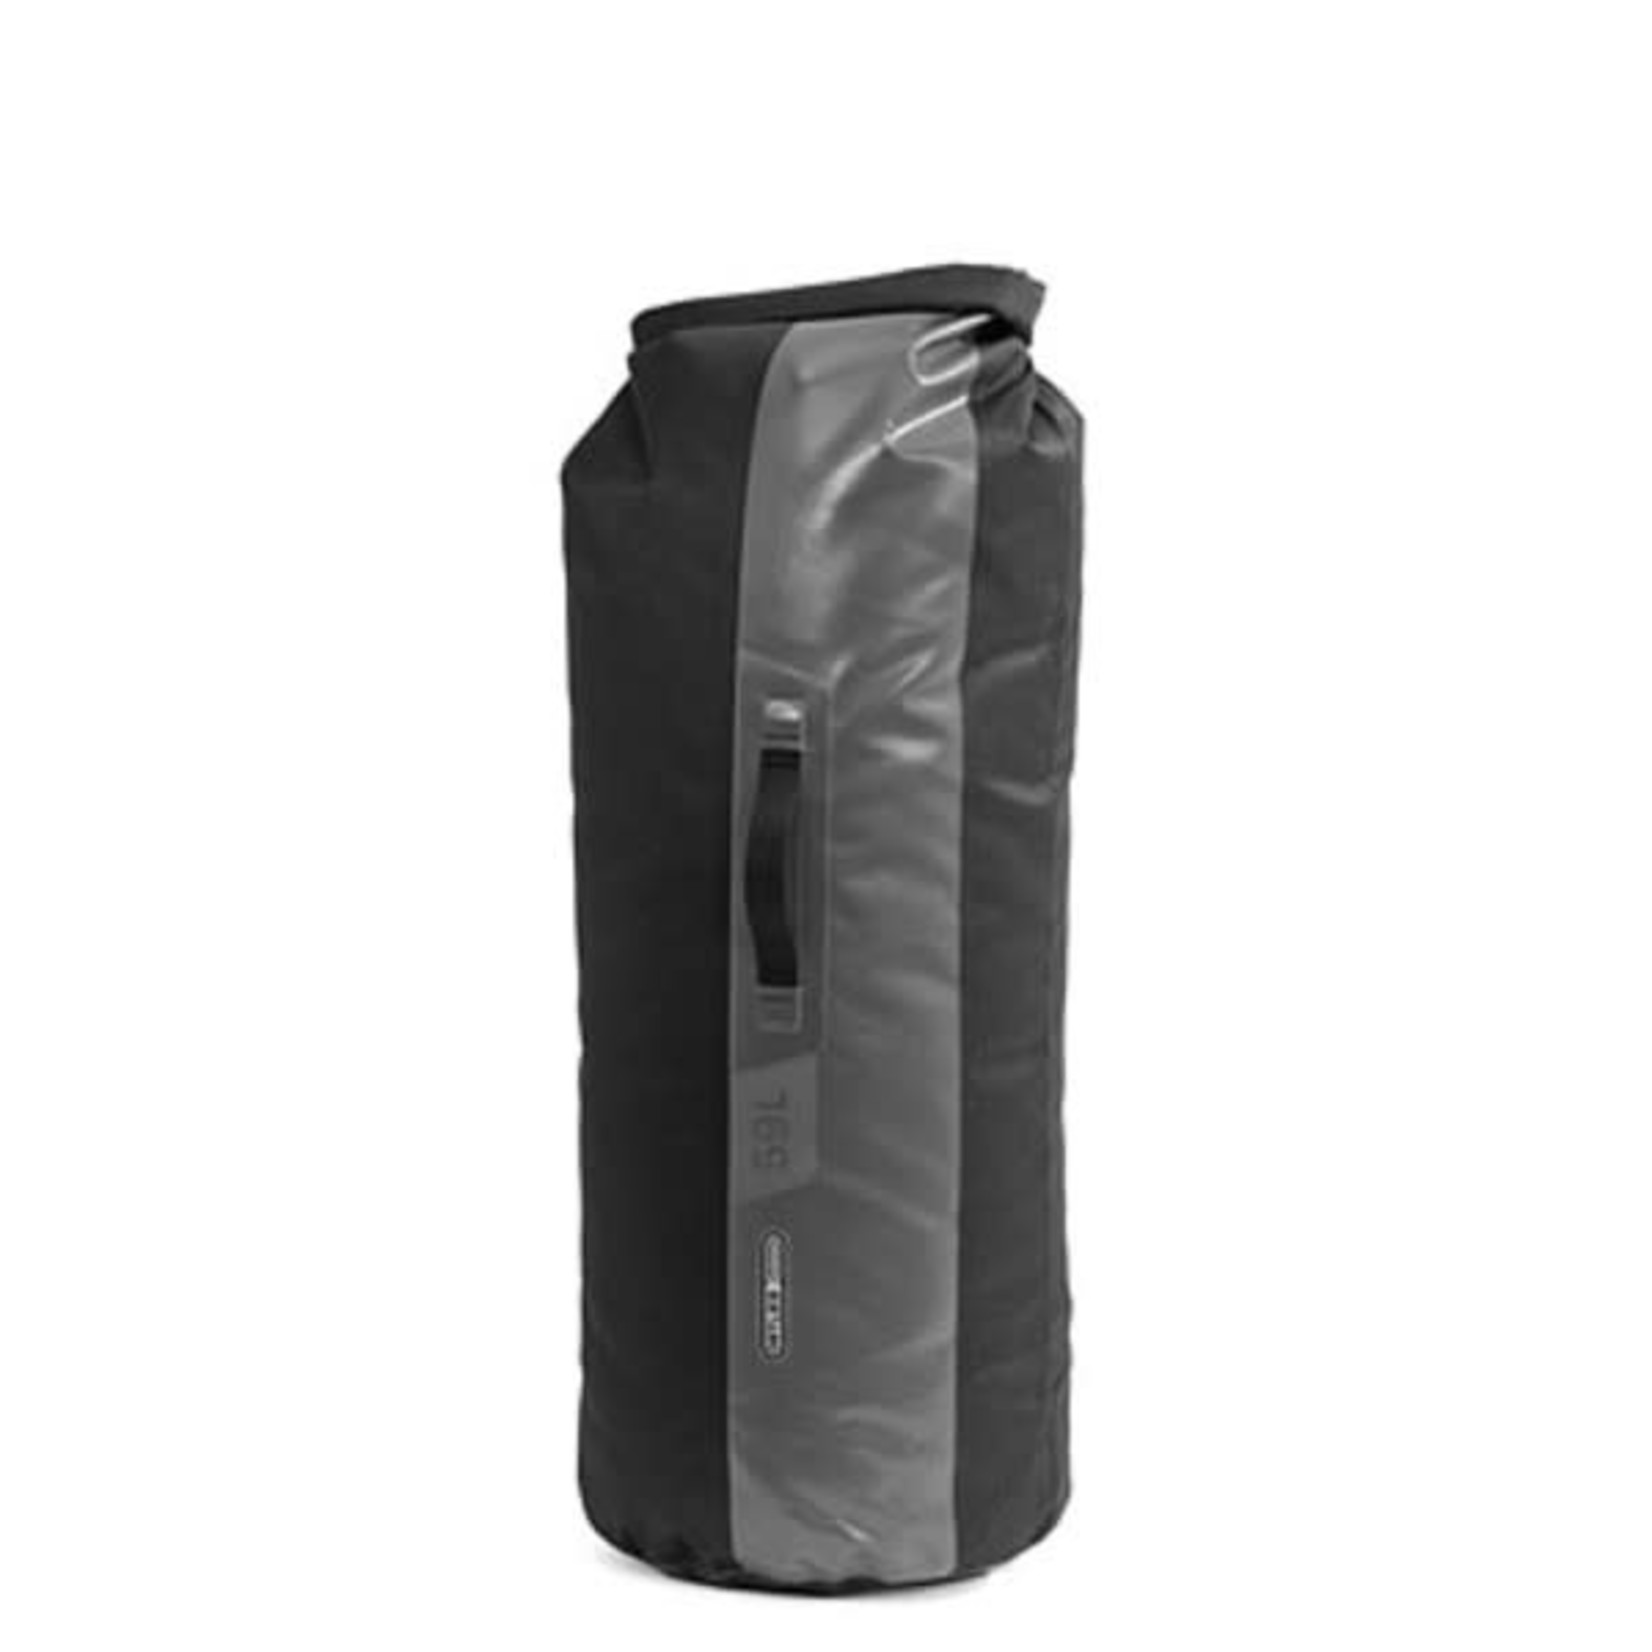 Ortlieb New Ortlieb Dry Bag PS490 K5651 - 59L Black-Grey Waterproof Heavy-Duty Fabrics